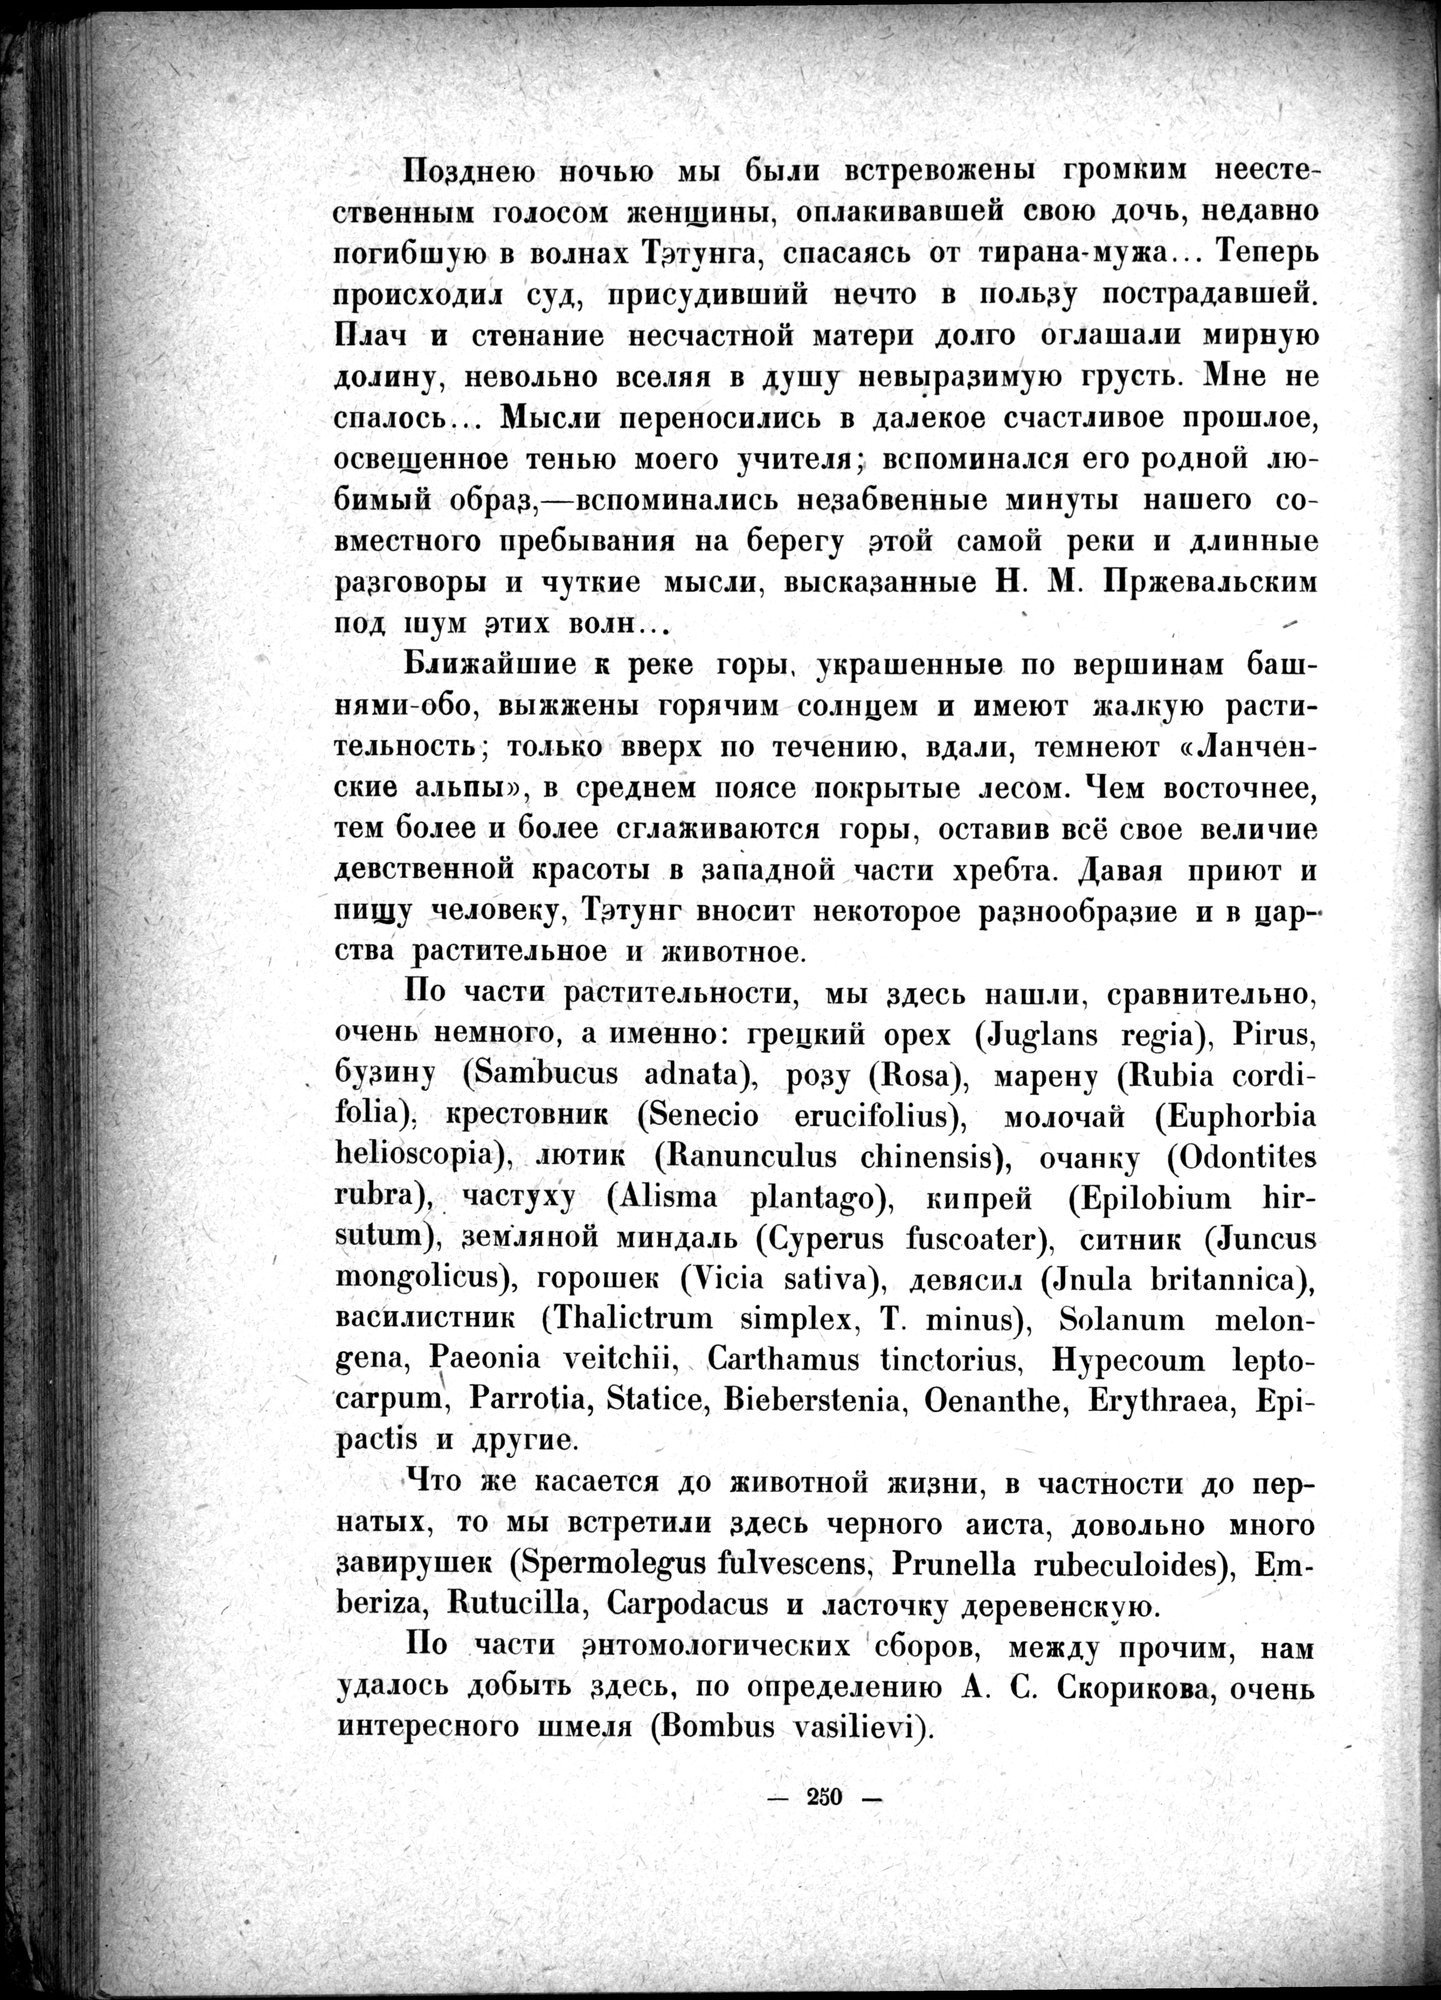 Mongoliya i Amdo i mertby gorod Khara-Khoto : vol.1 / Page 296 (Grayscale High Resolution Image)